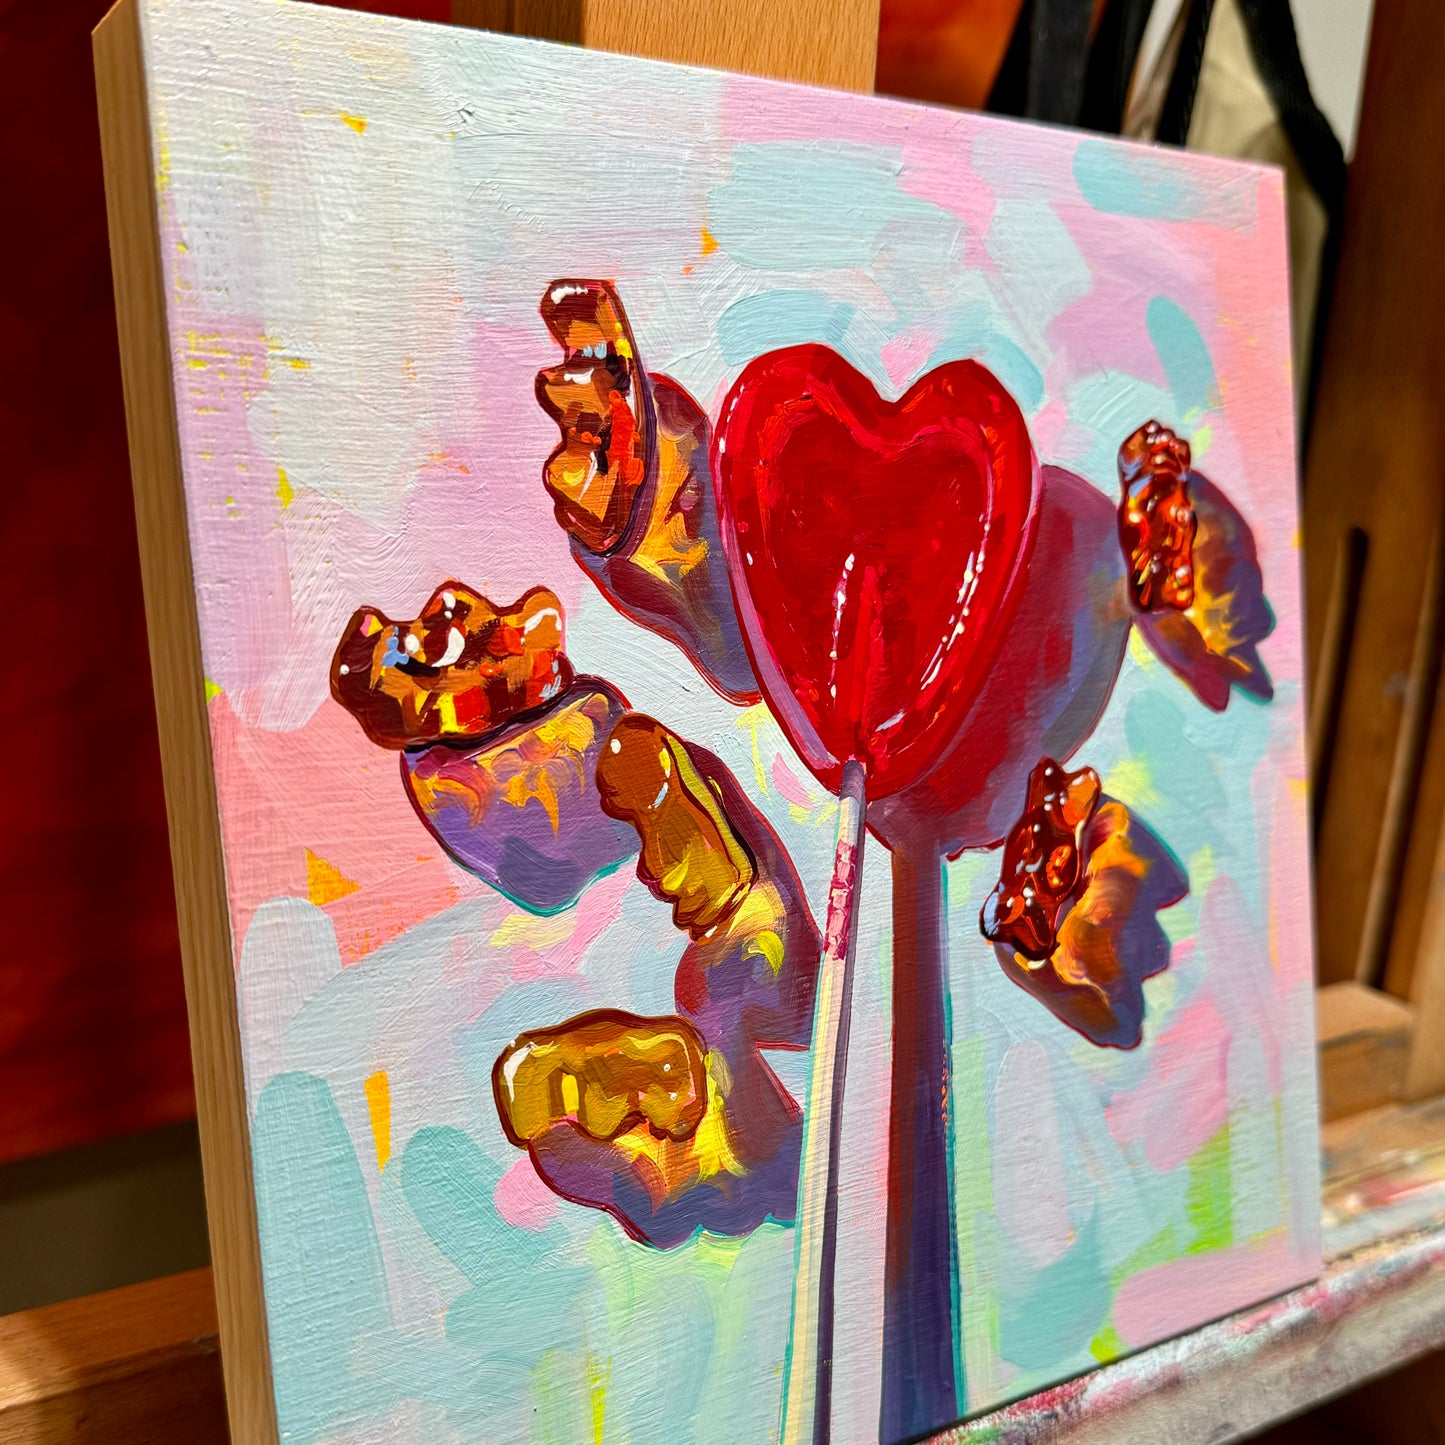 Heart lollipop and bears - Original Oil Painting